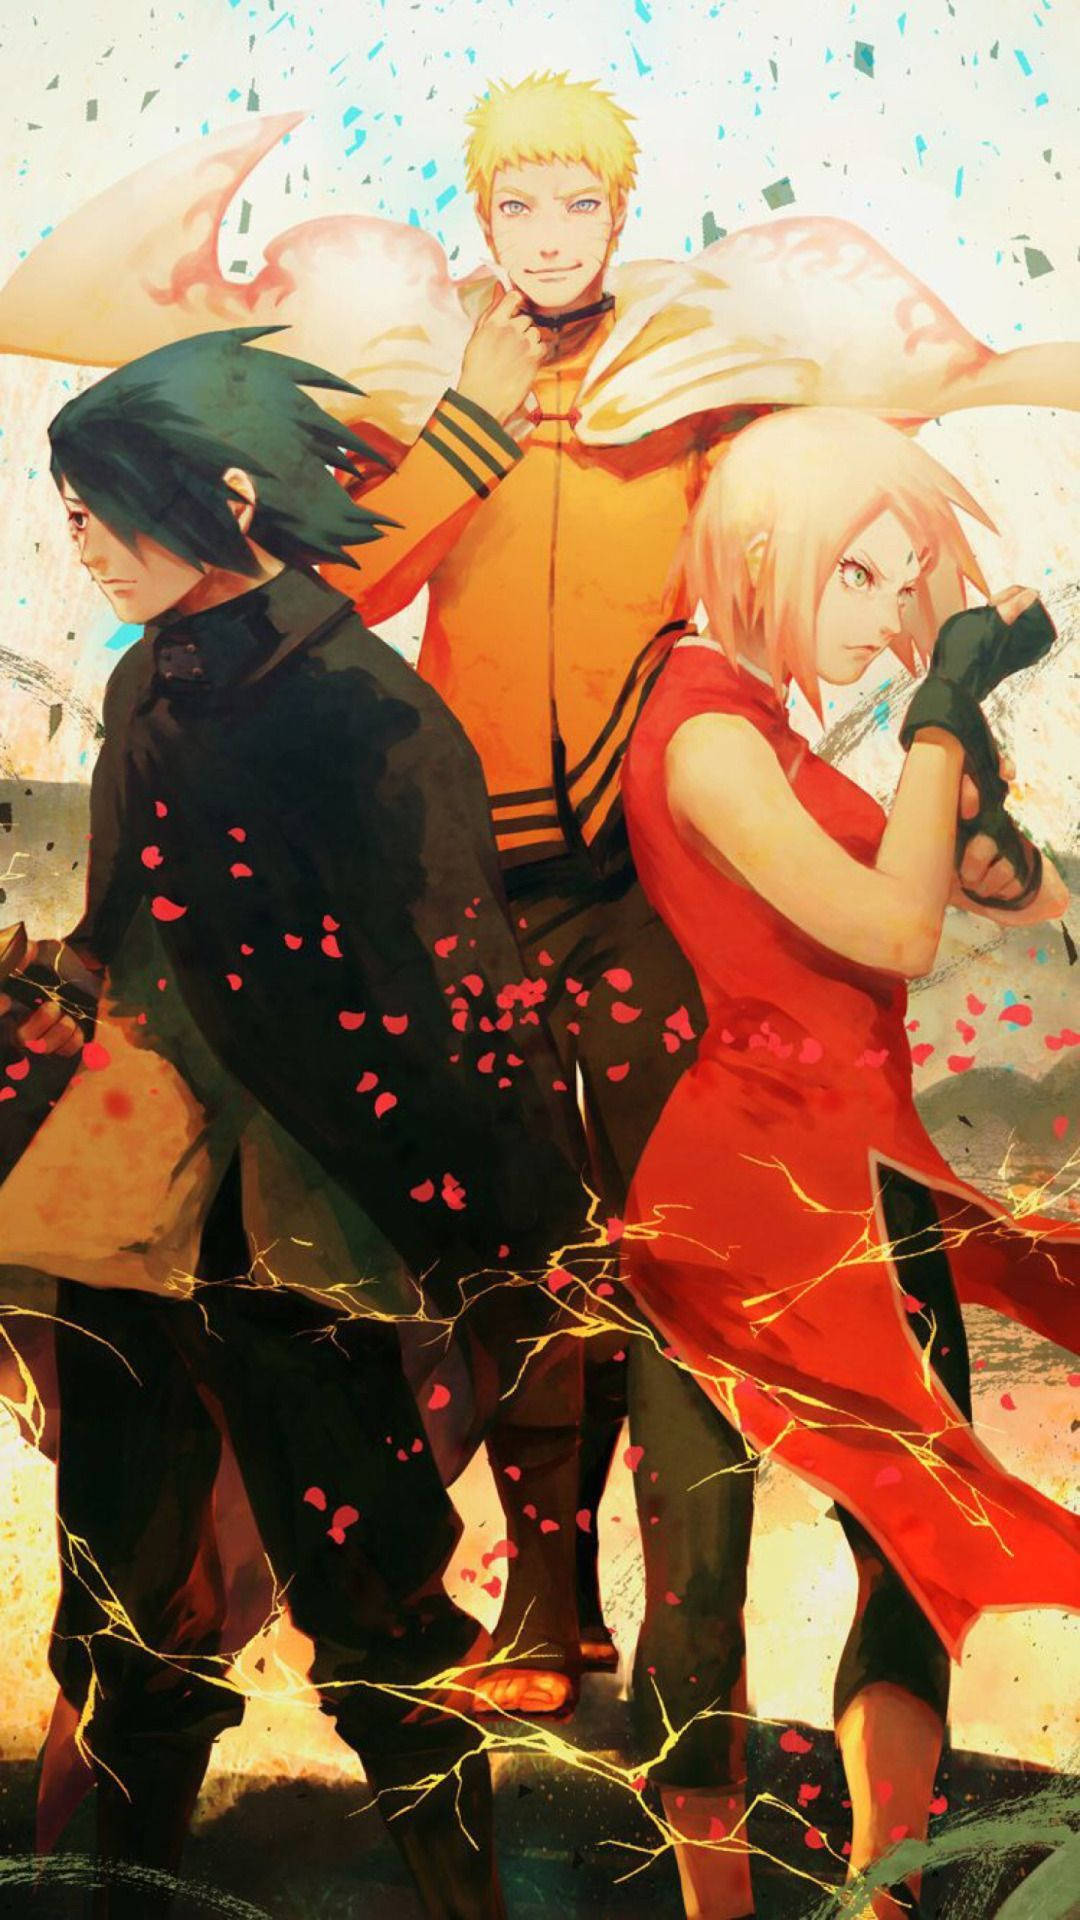 Narutoaffischkonst. Wallpaper